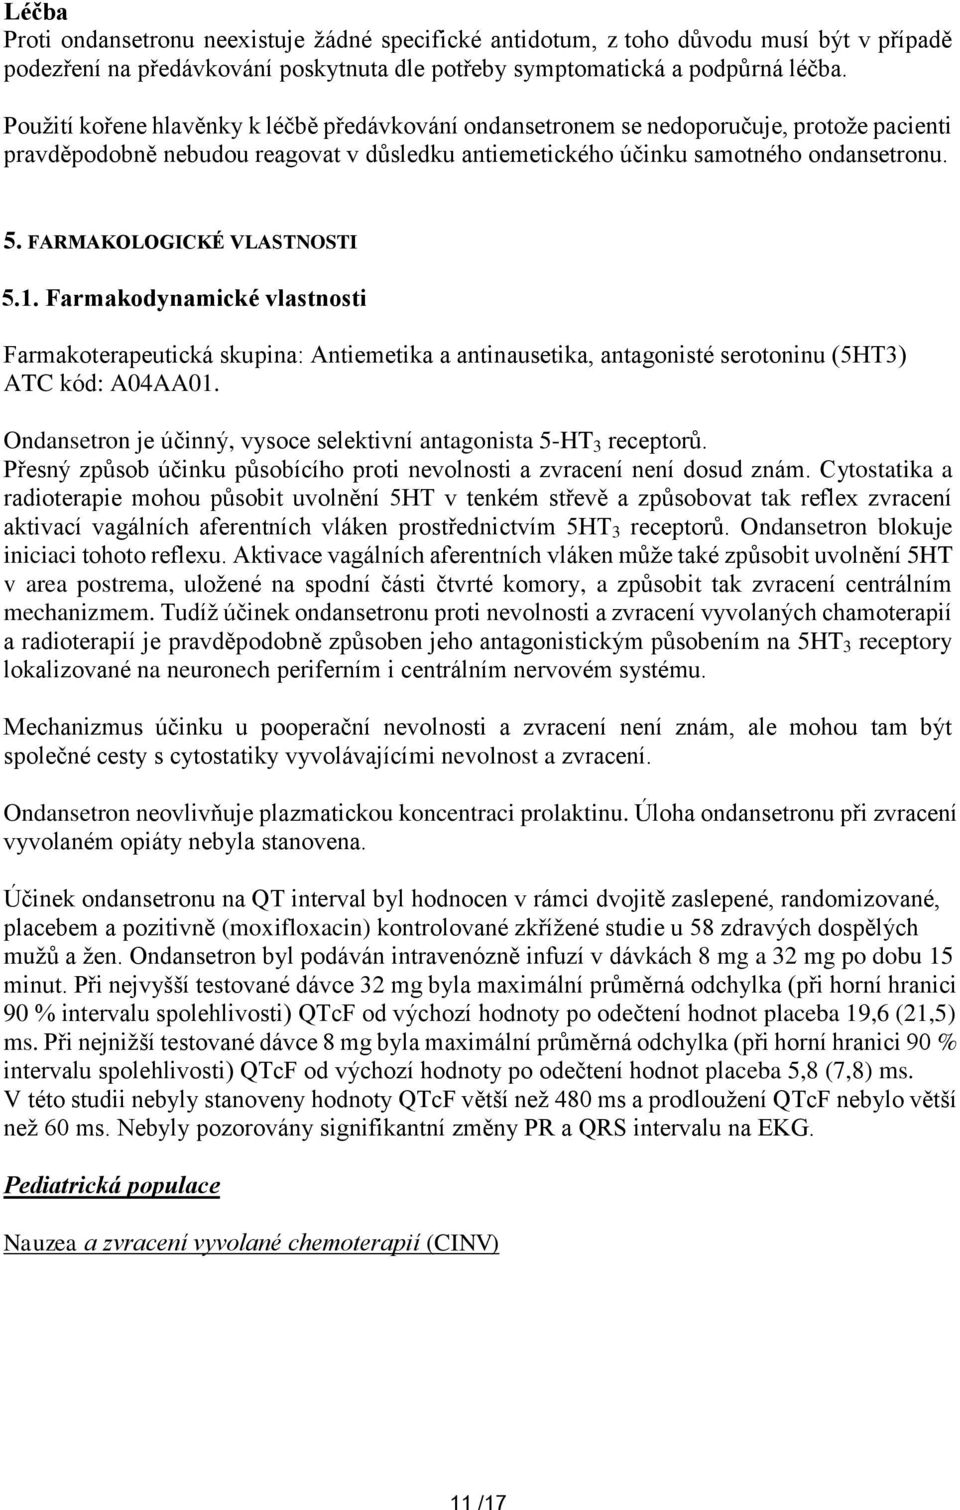 FARMAKOLOGICKÉ VLASTNOSTI 5.1. Farmakodynamické vlastnosti Farmakoterapeutická skupina: Antiemetika a antinausetika, antagonisté serotoninu (5HT3) ATC kód: A04AA01.